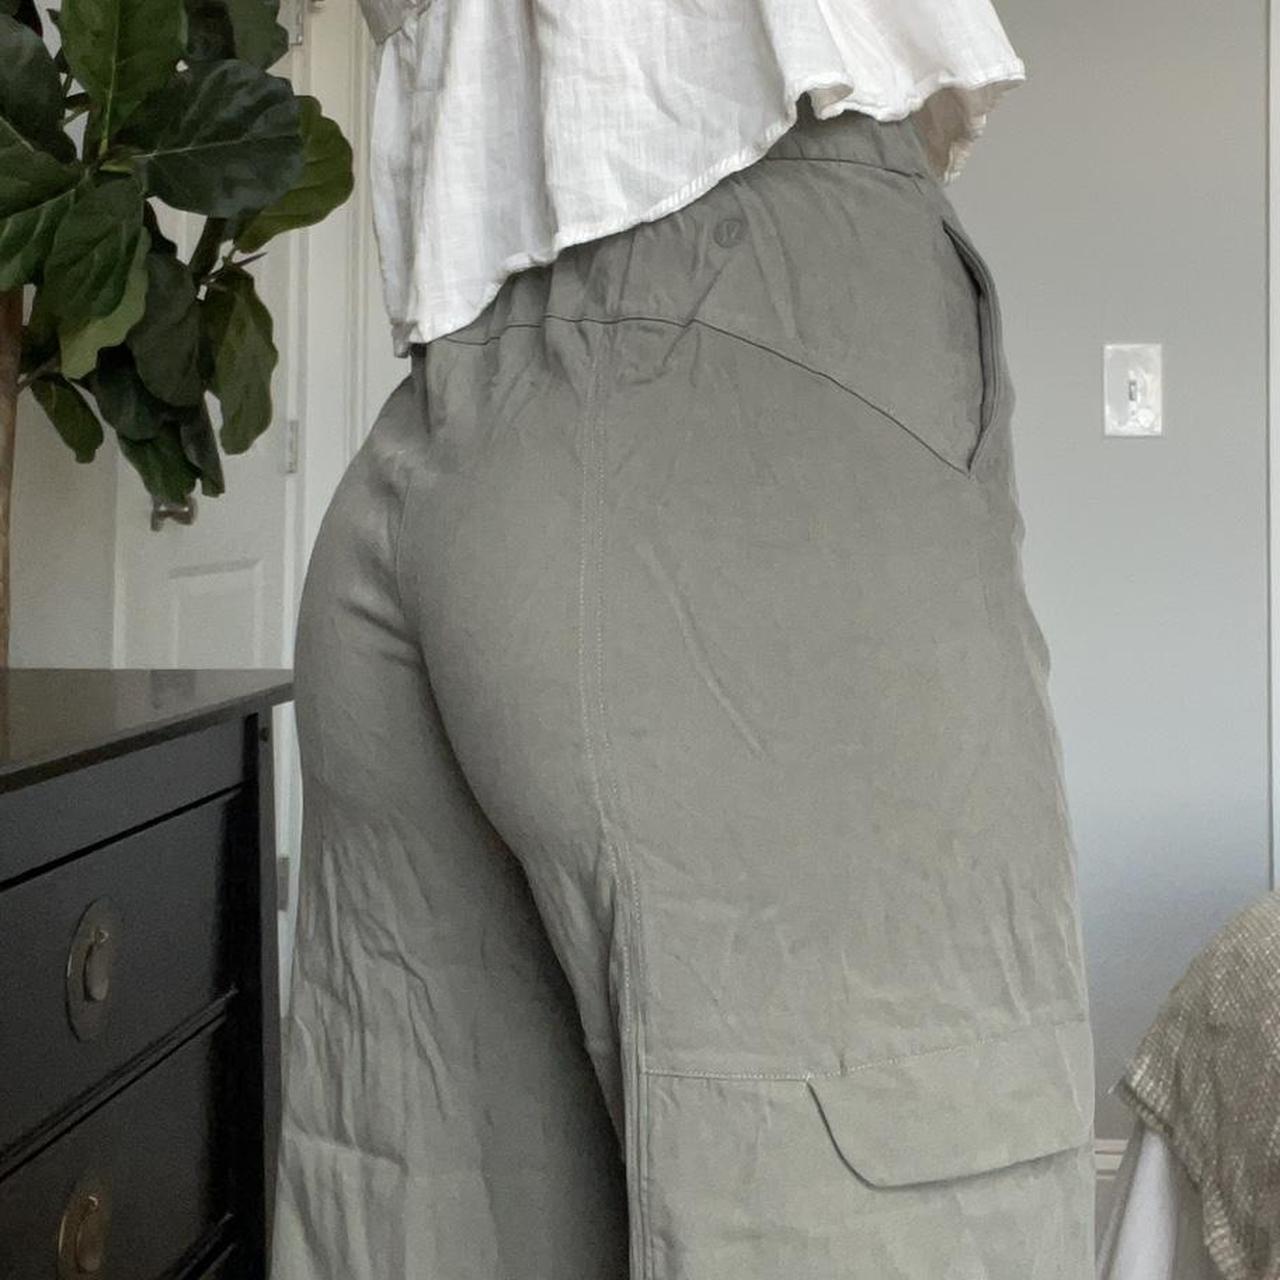 Indigo Luna set (top and flare pants) size xl - - Depop